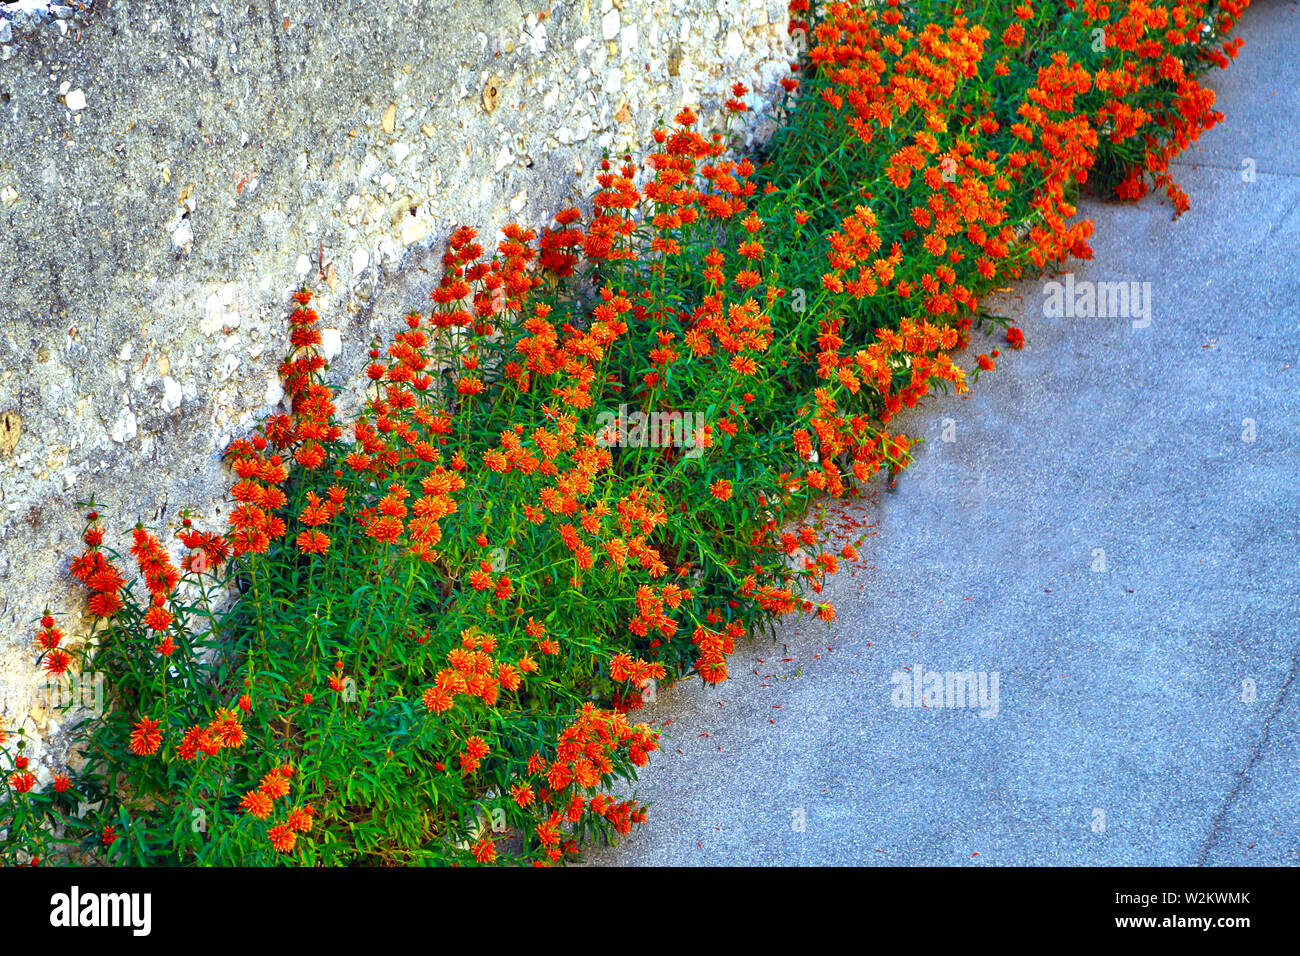 Lions tail plant, leonotis leonurus, wild dagga, red orange southern flowers on one stem several umbrellas Stock Photo